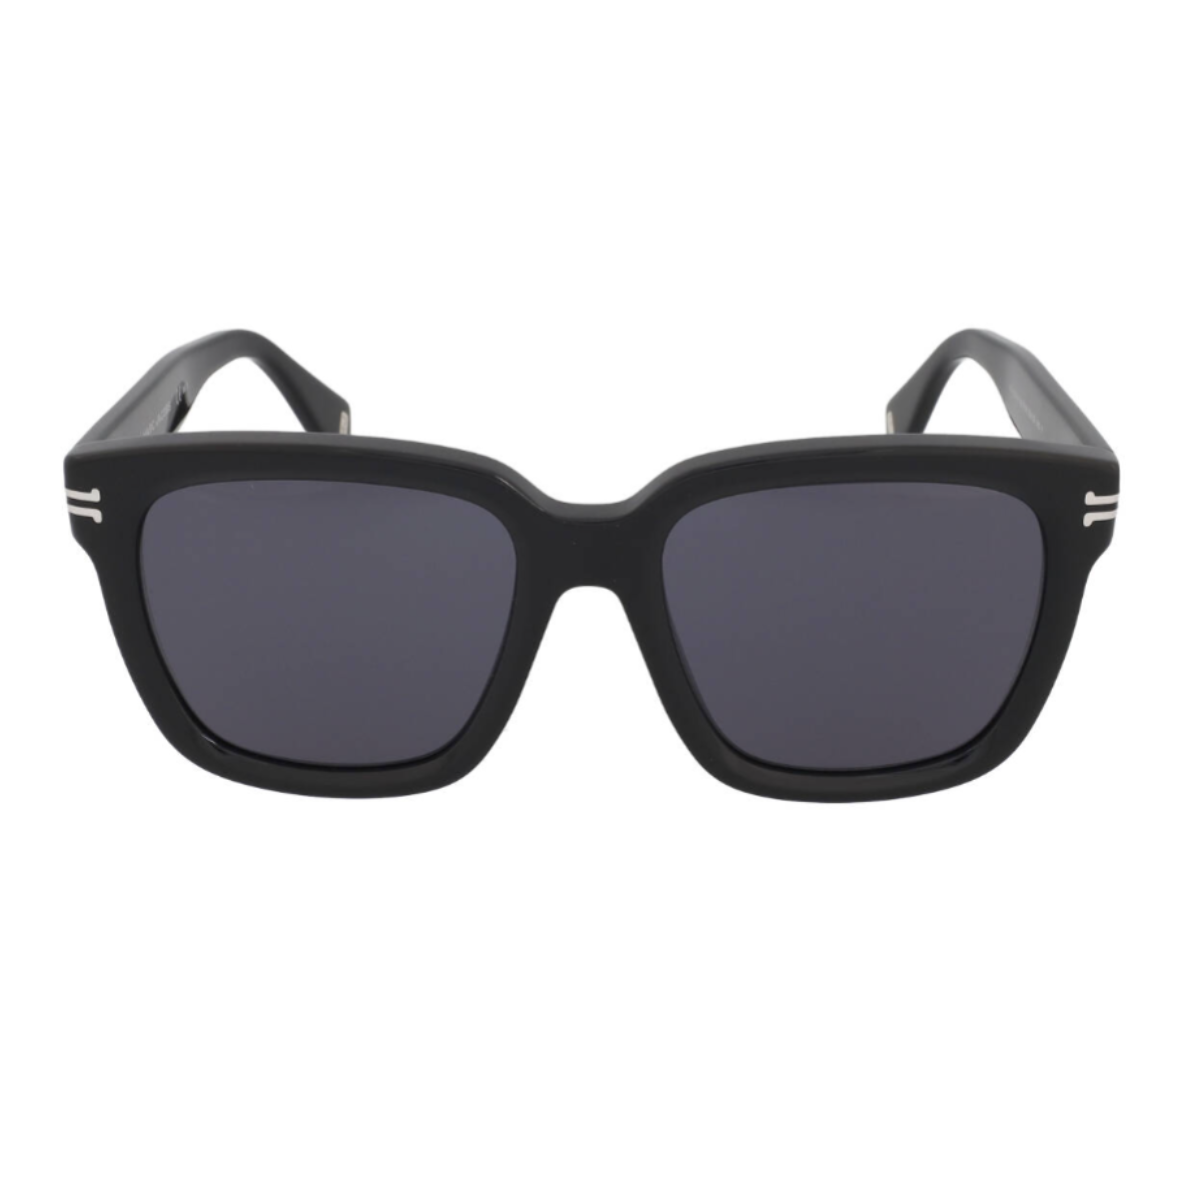 Marc Jacobs 1035 Sunglasses